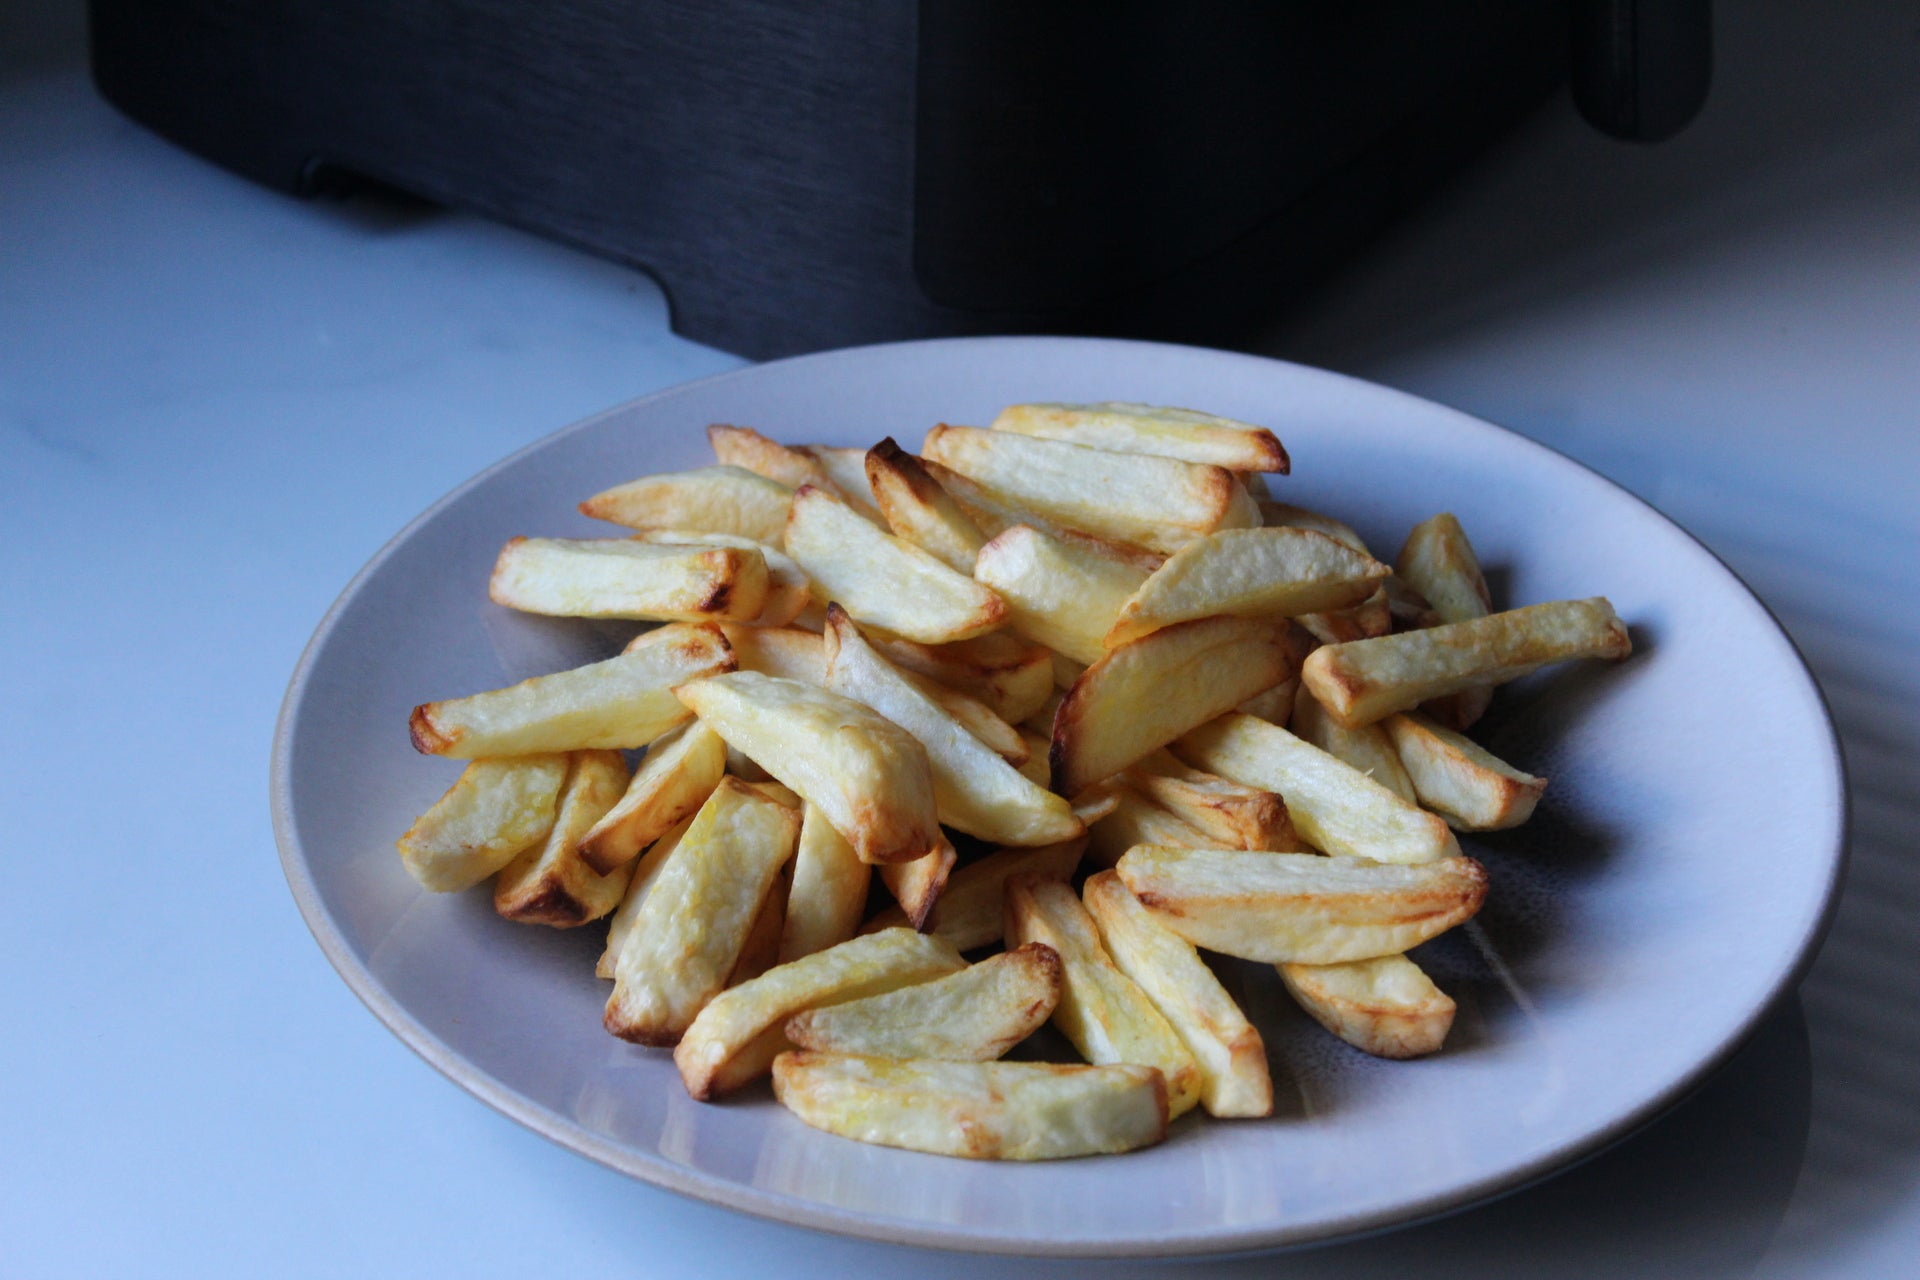 Patatas fritas cocidas Dualit Air Fryer